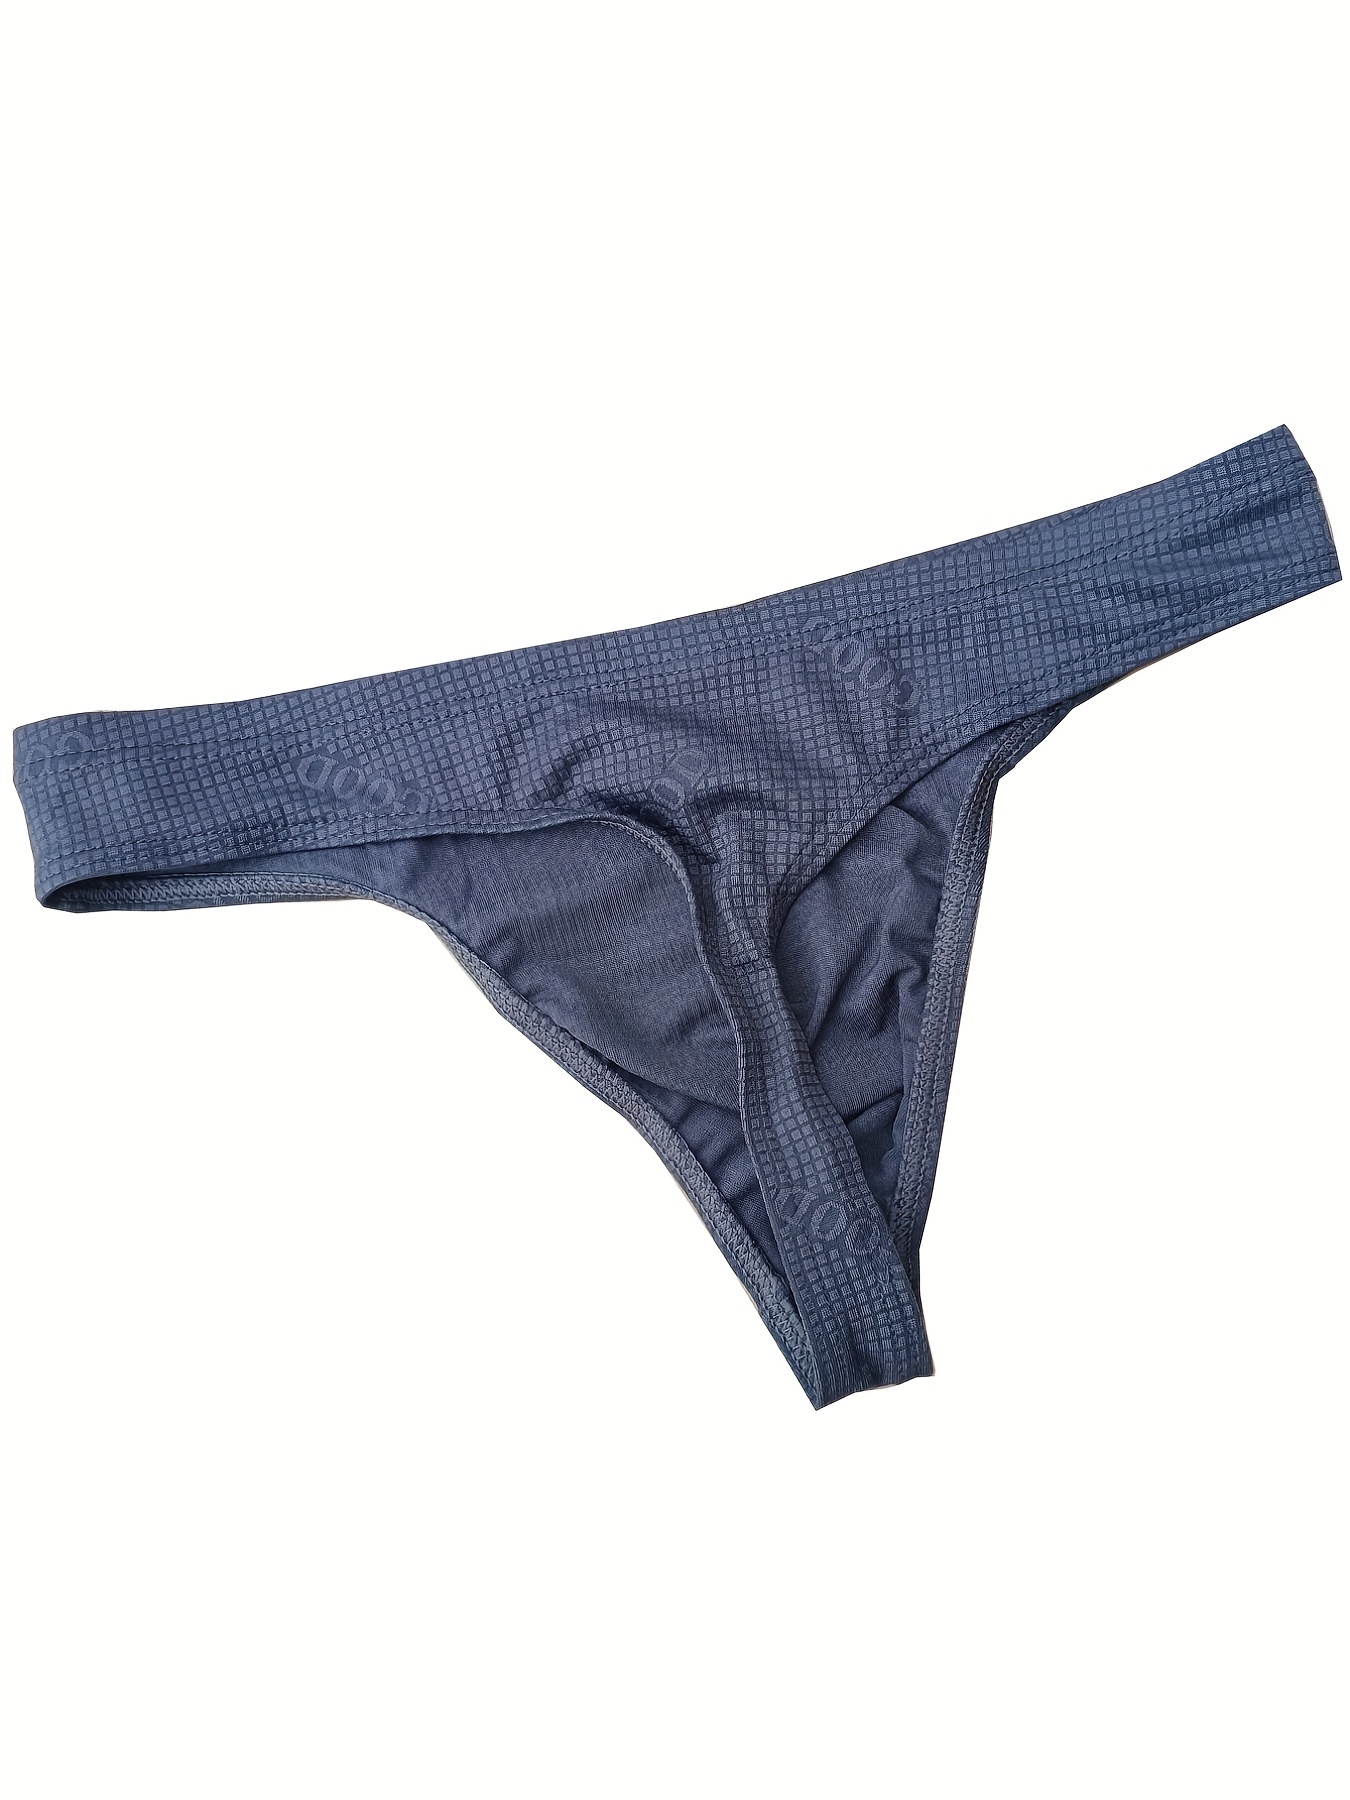 Briefs Underwear Low Waist T-back Seamless G-string Thongs Hot